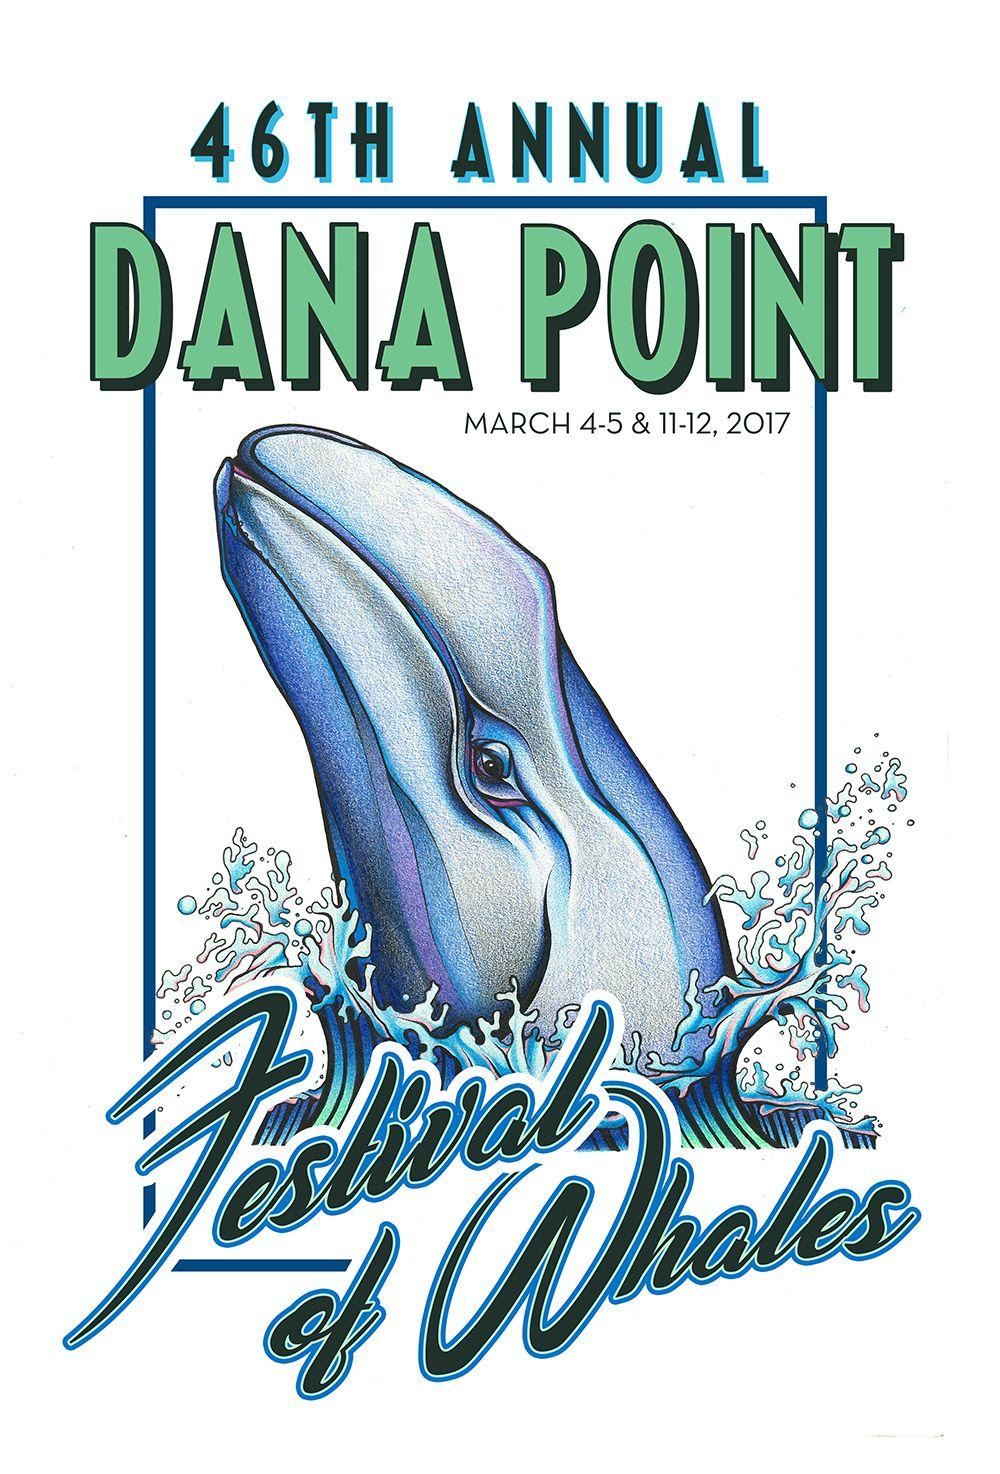 Whales Logo - Logo History | Dana Point Festival of Whales